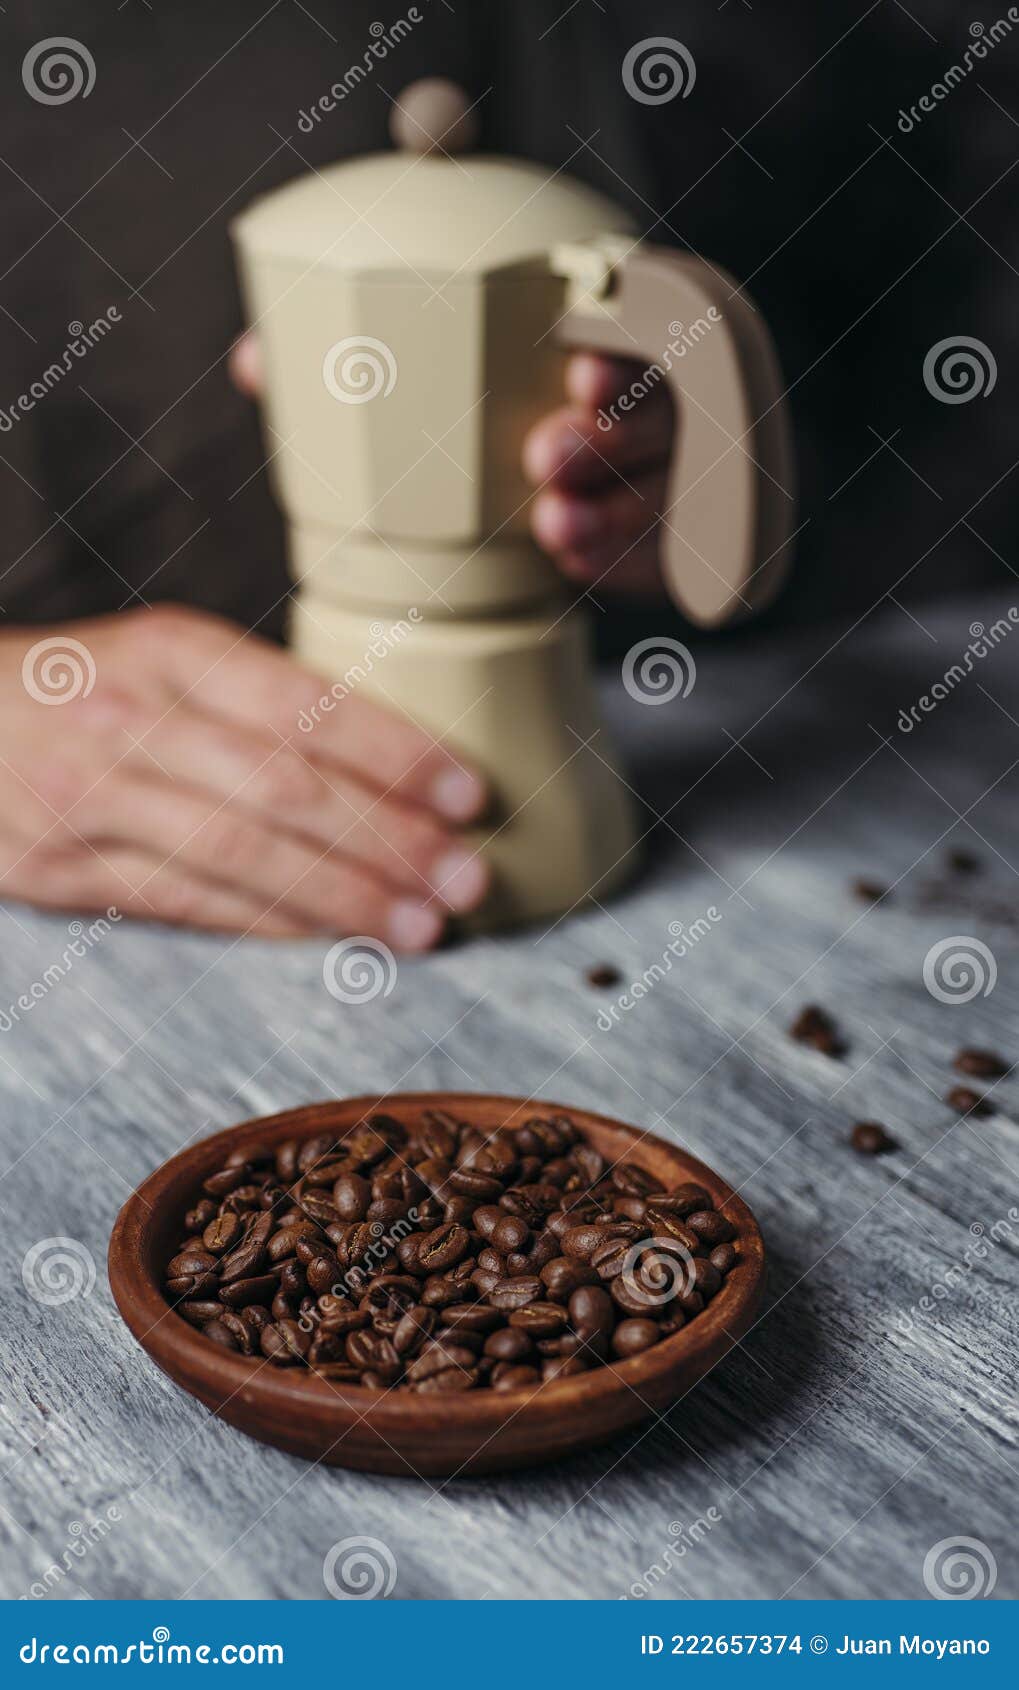 man is preparing coffee in a beige moka pot